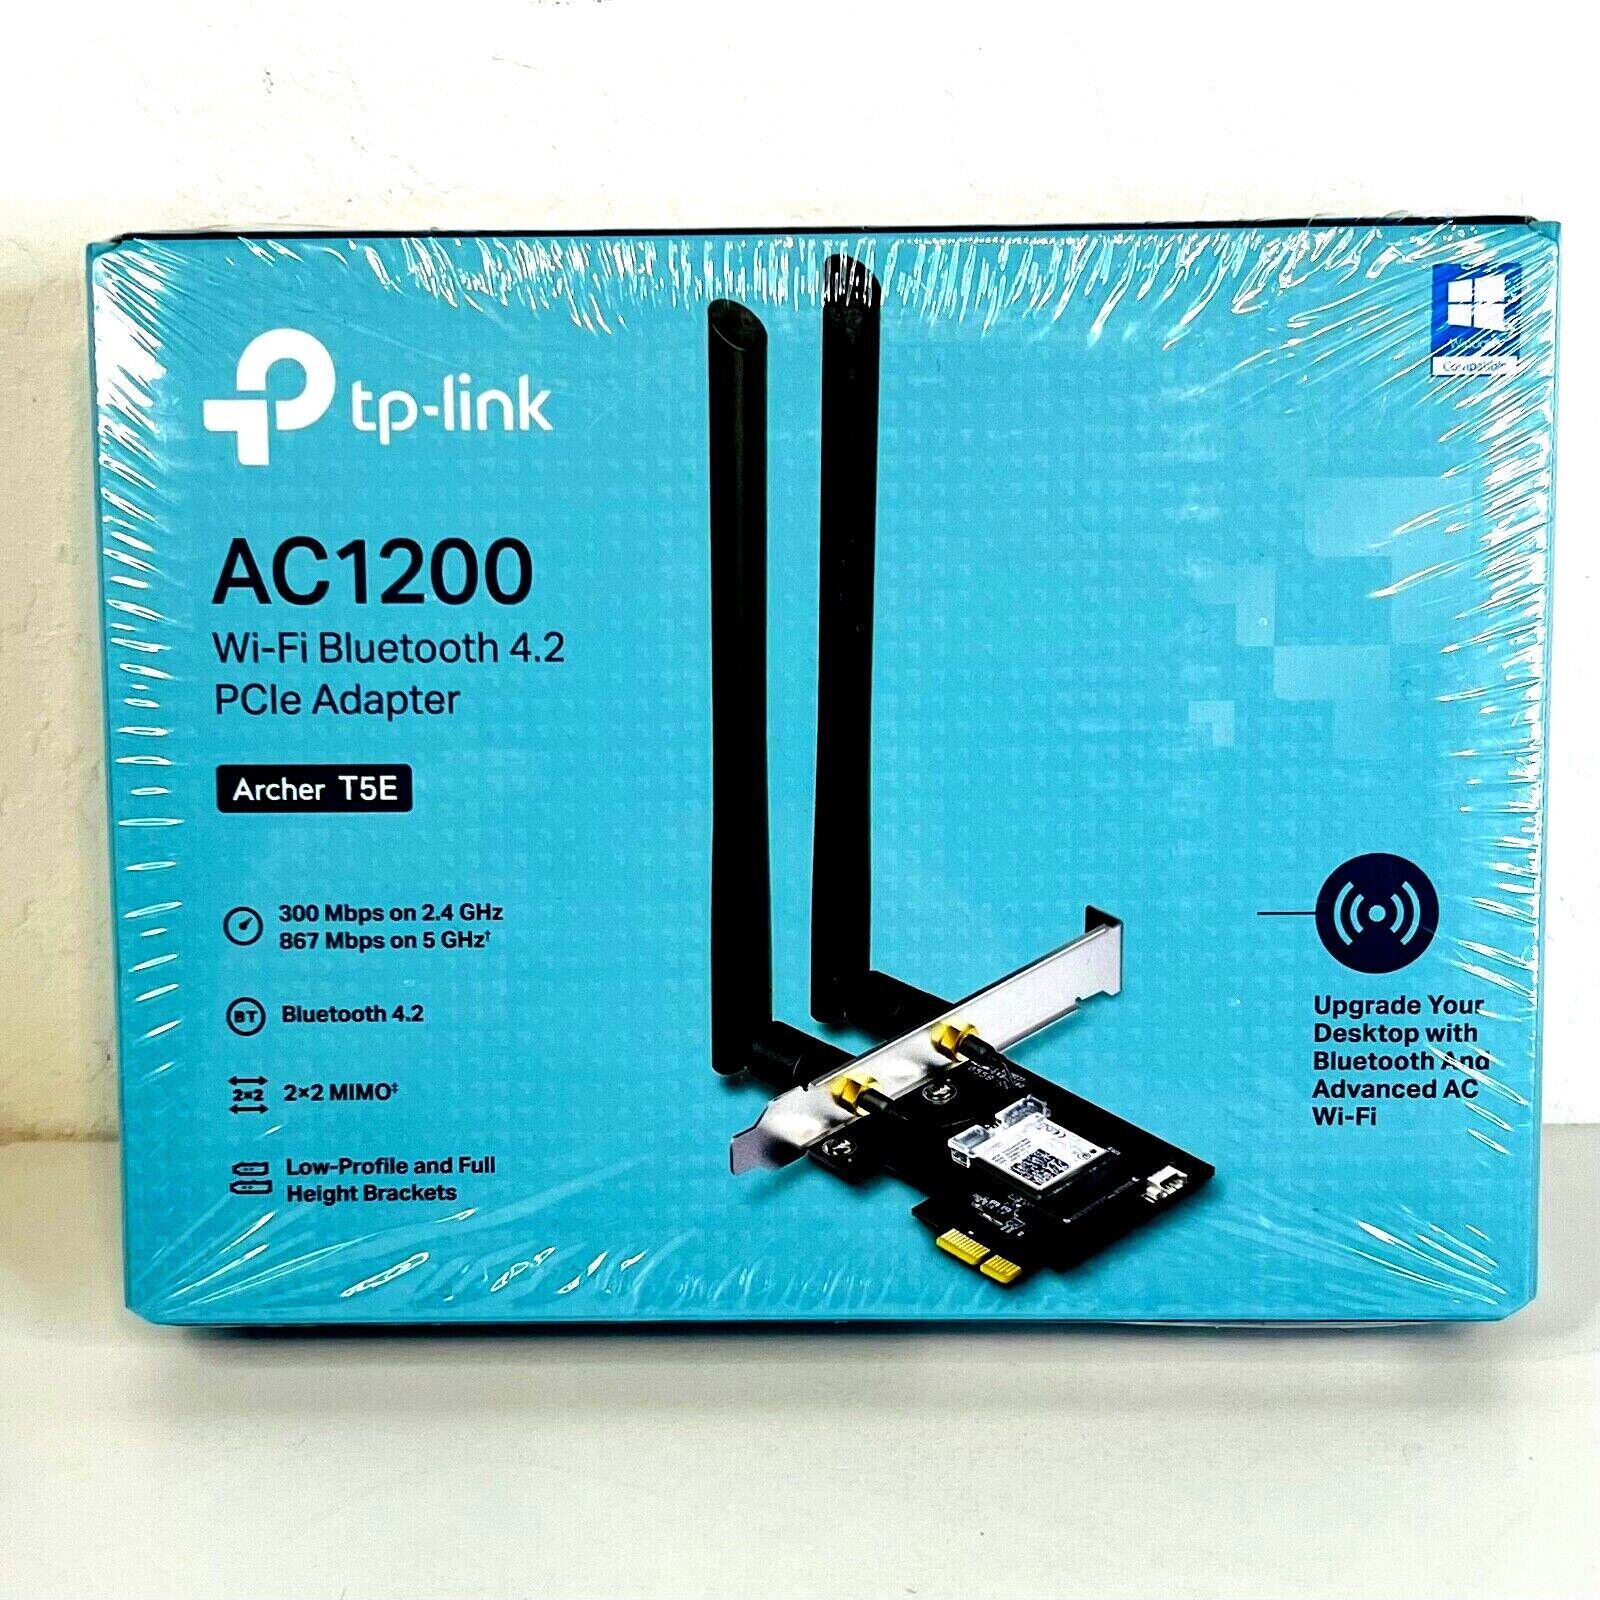 TP-Link Archer T5E AC1200 WiFi Bluetooth 4.2 PCIe Adapter - $24.18